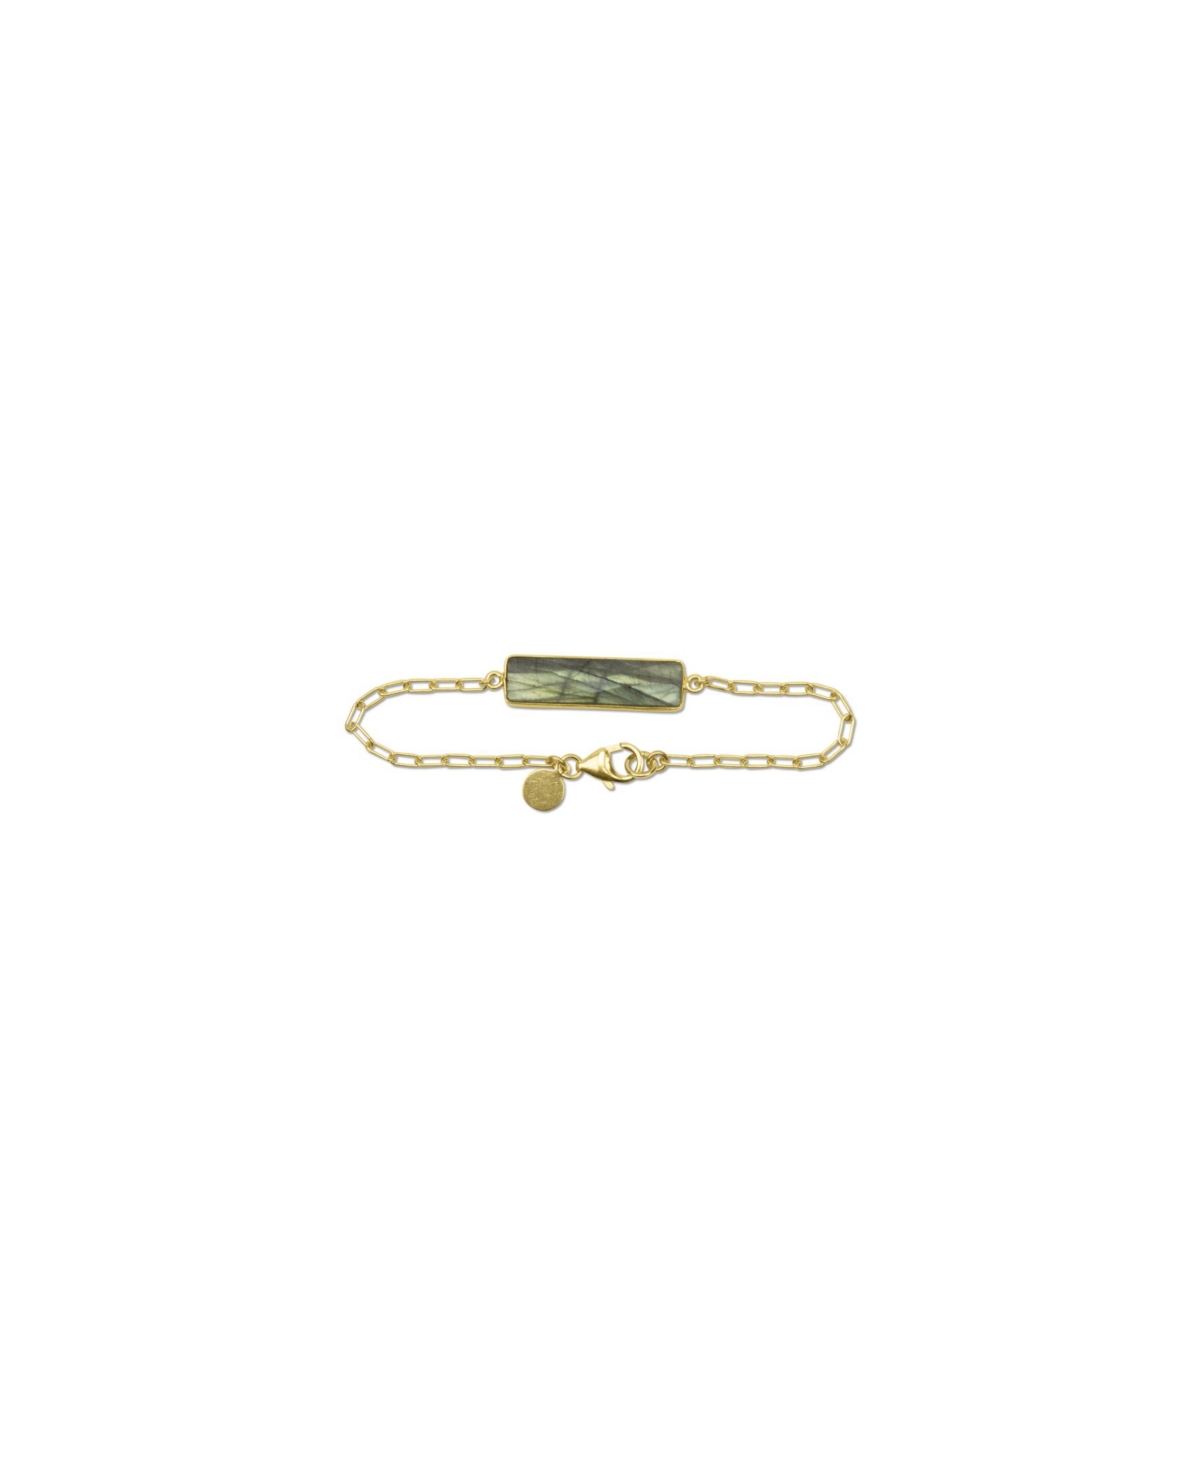 Bezel Set Labradorite Bar Bracelet with 14K Gold Fill Chain - Gold - Fill